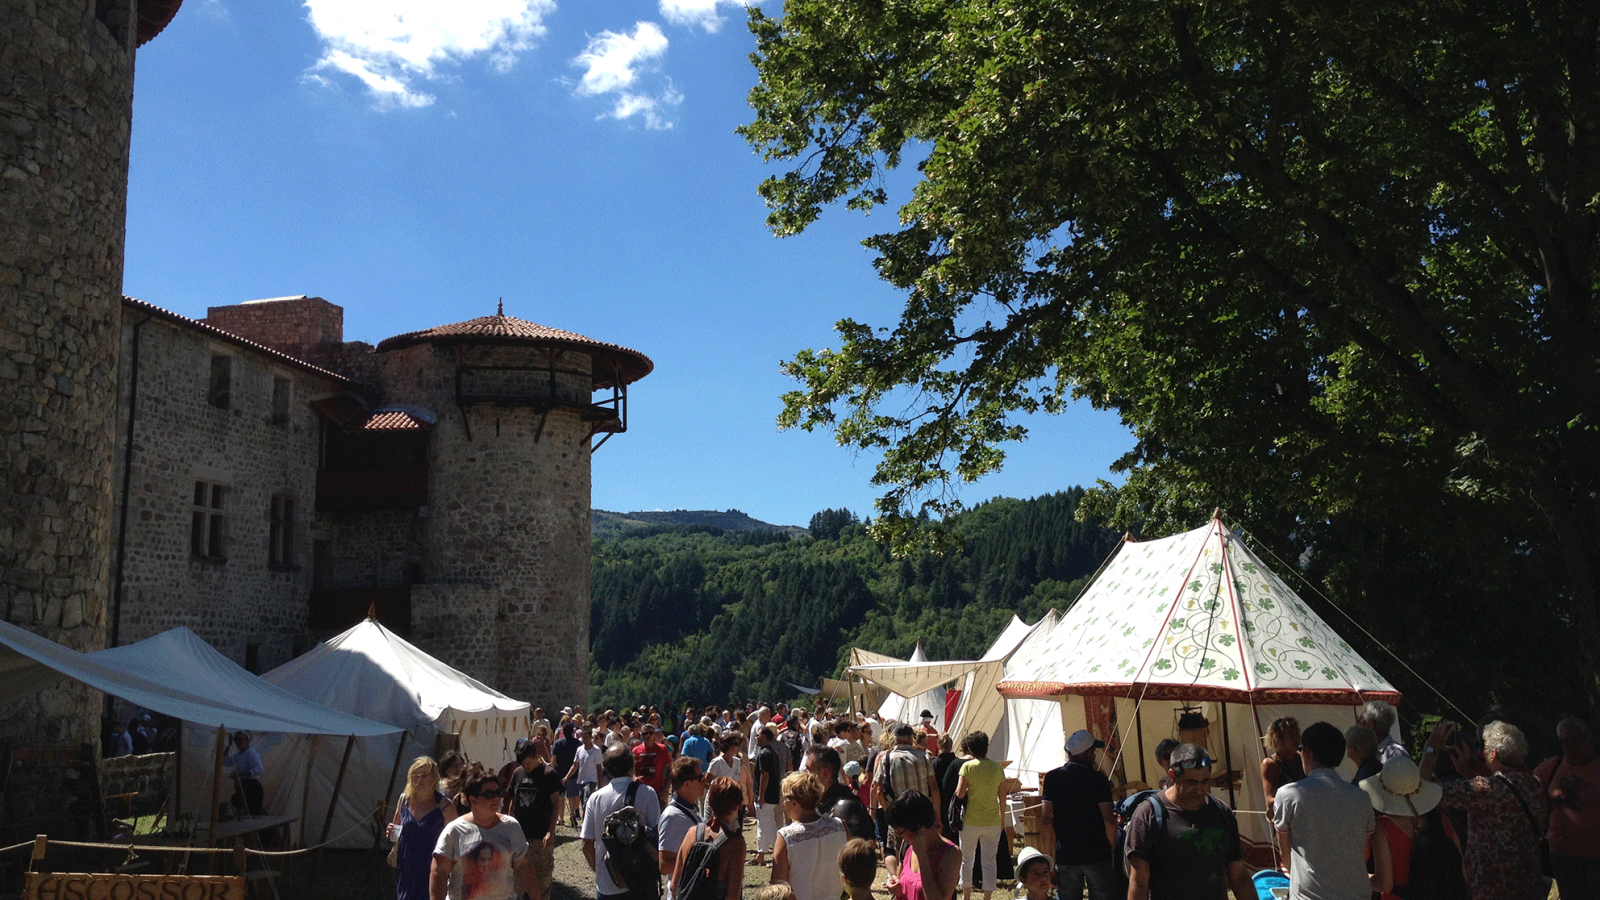 The Medieval Festival